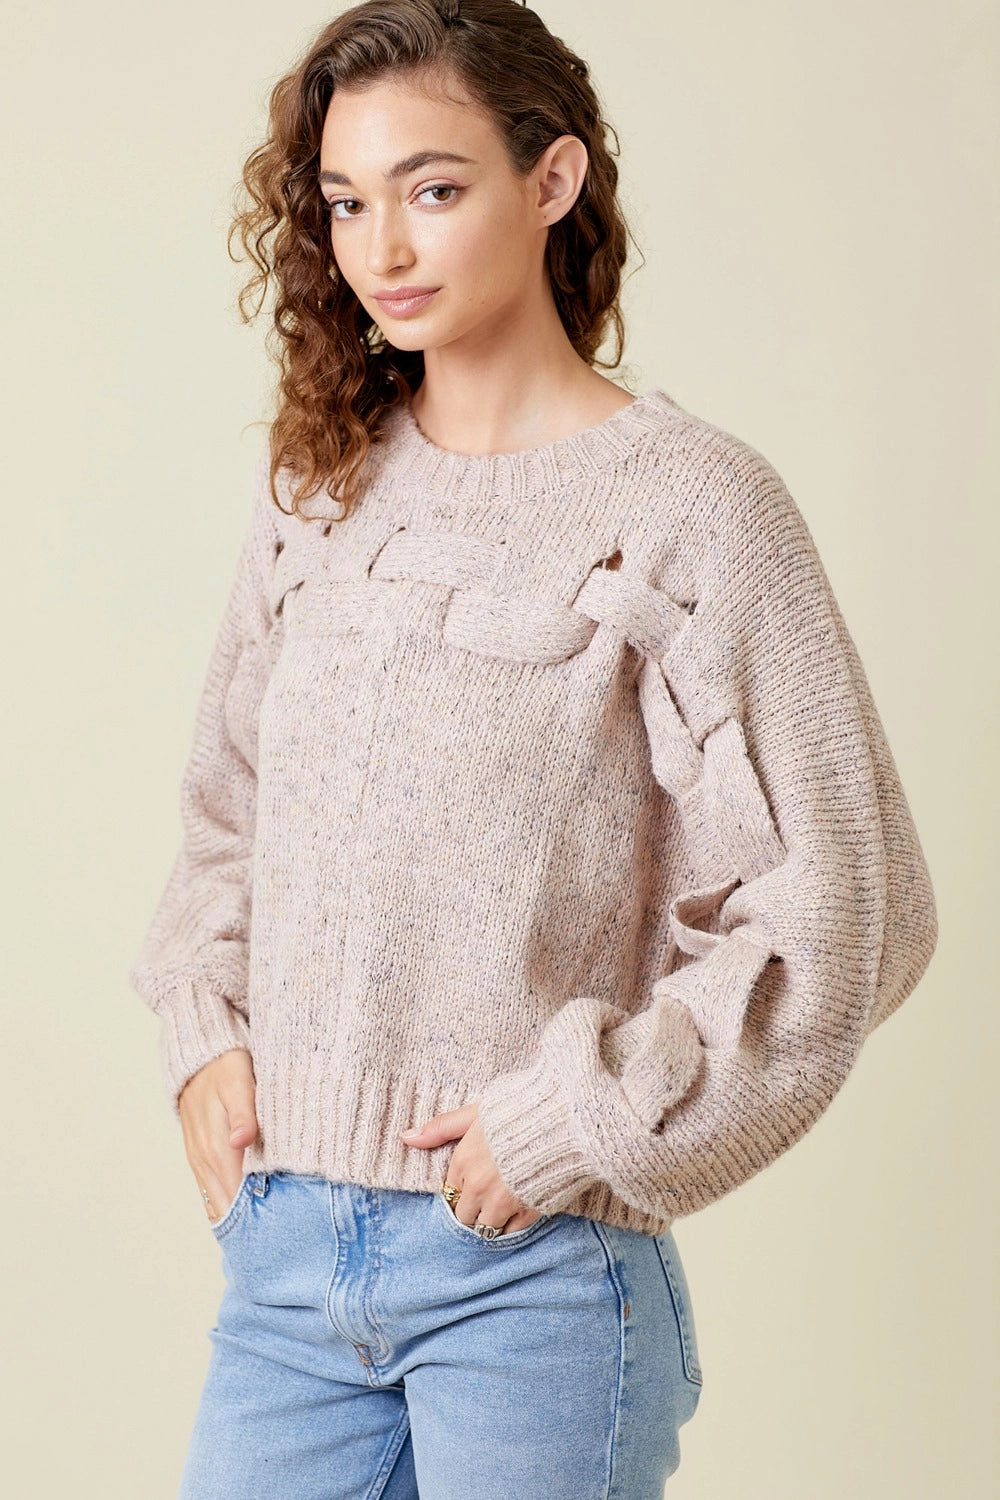 Apple Strudel Sweater